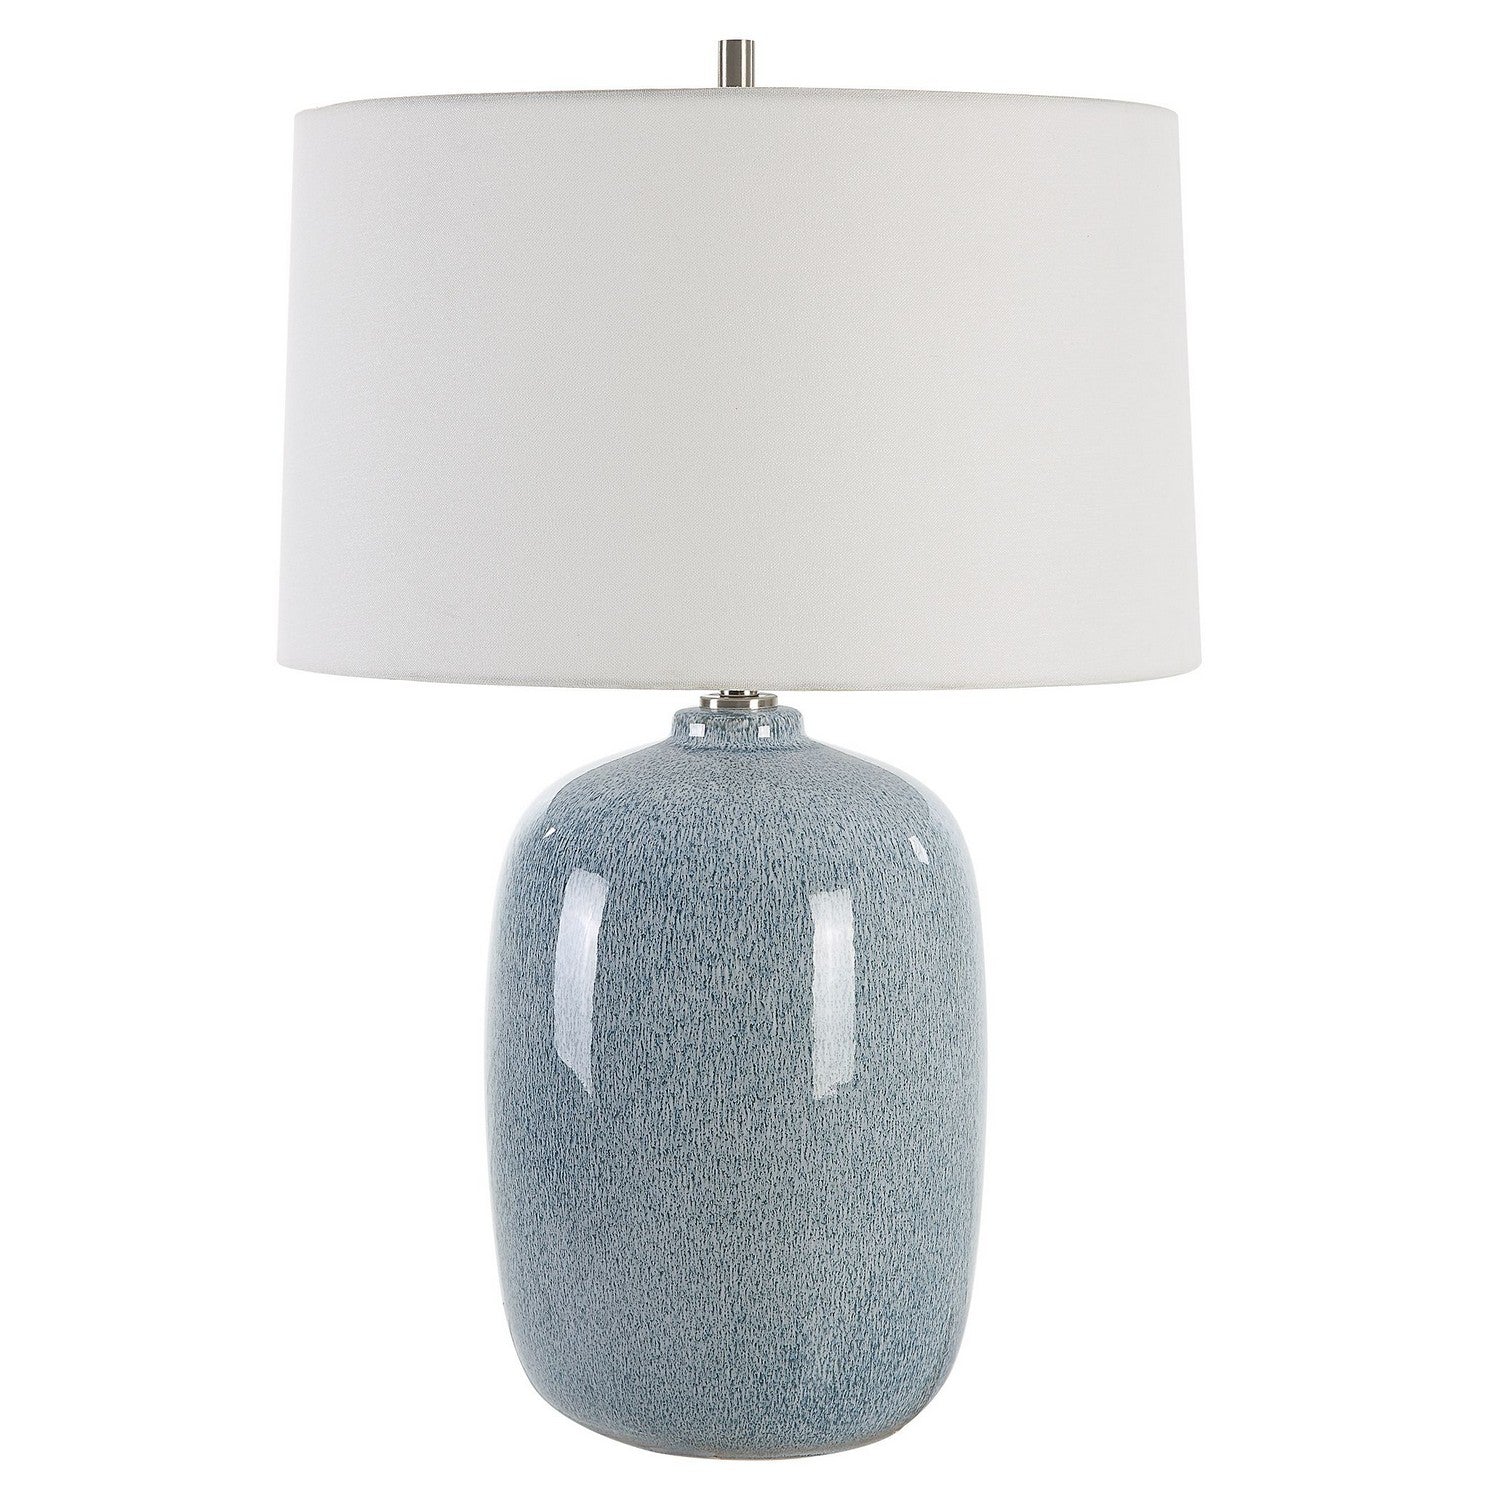 Uttermost - 30249 - One Light Table Lamp - Jubilee - Brushed Nickel